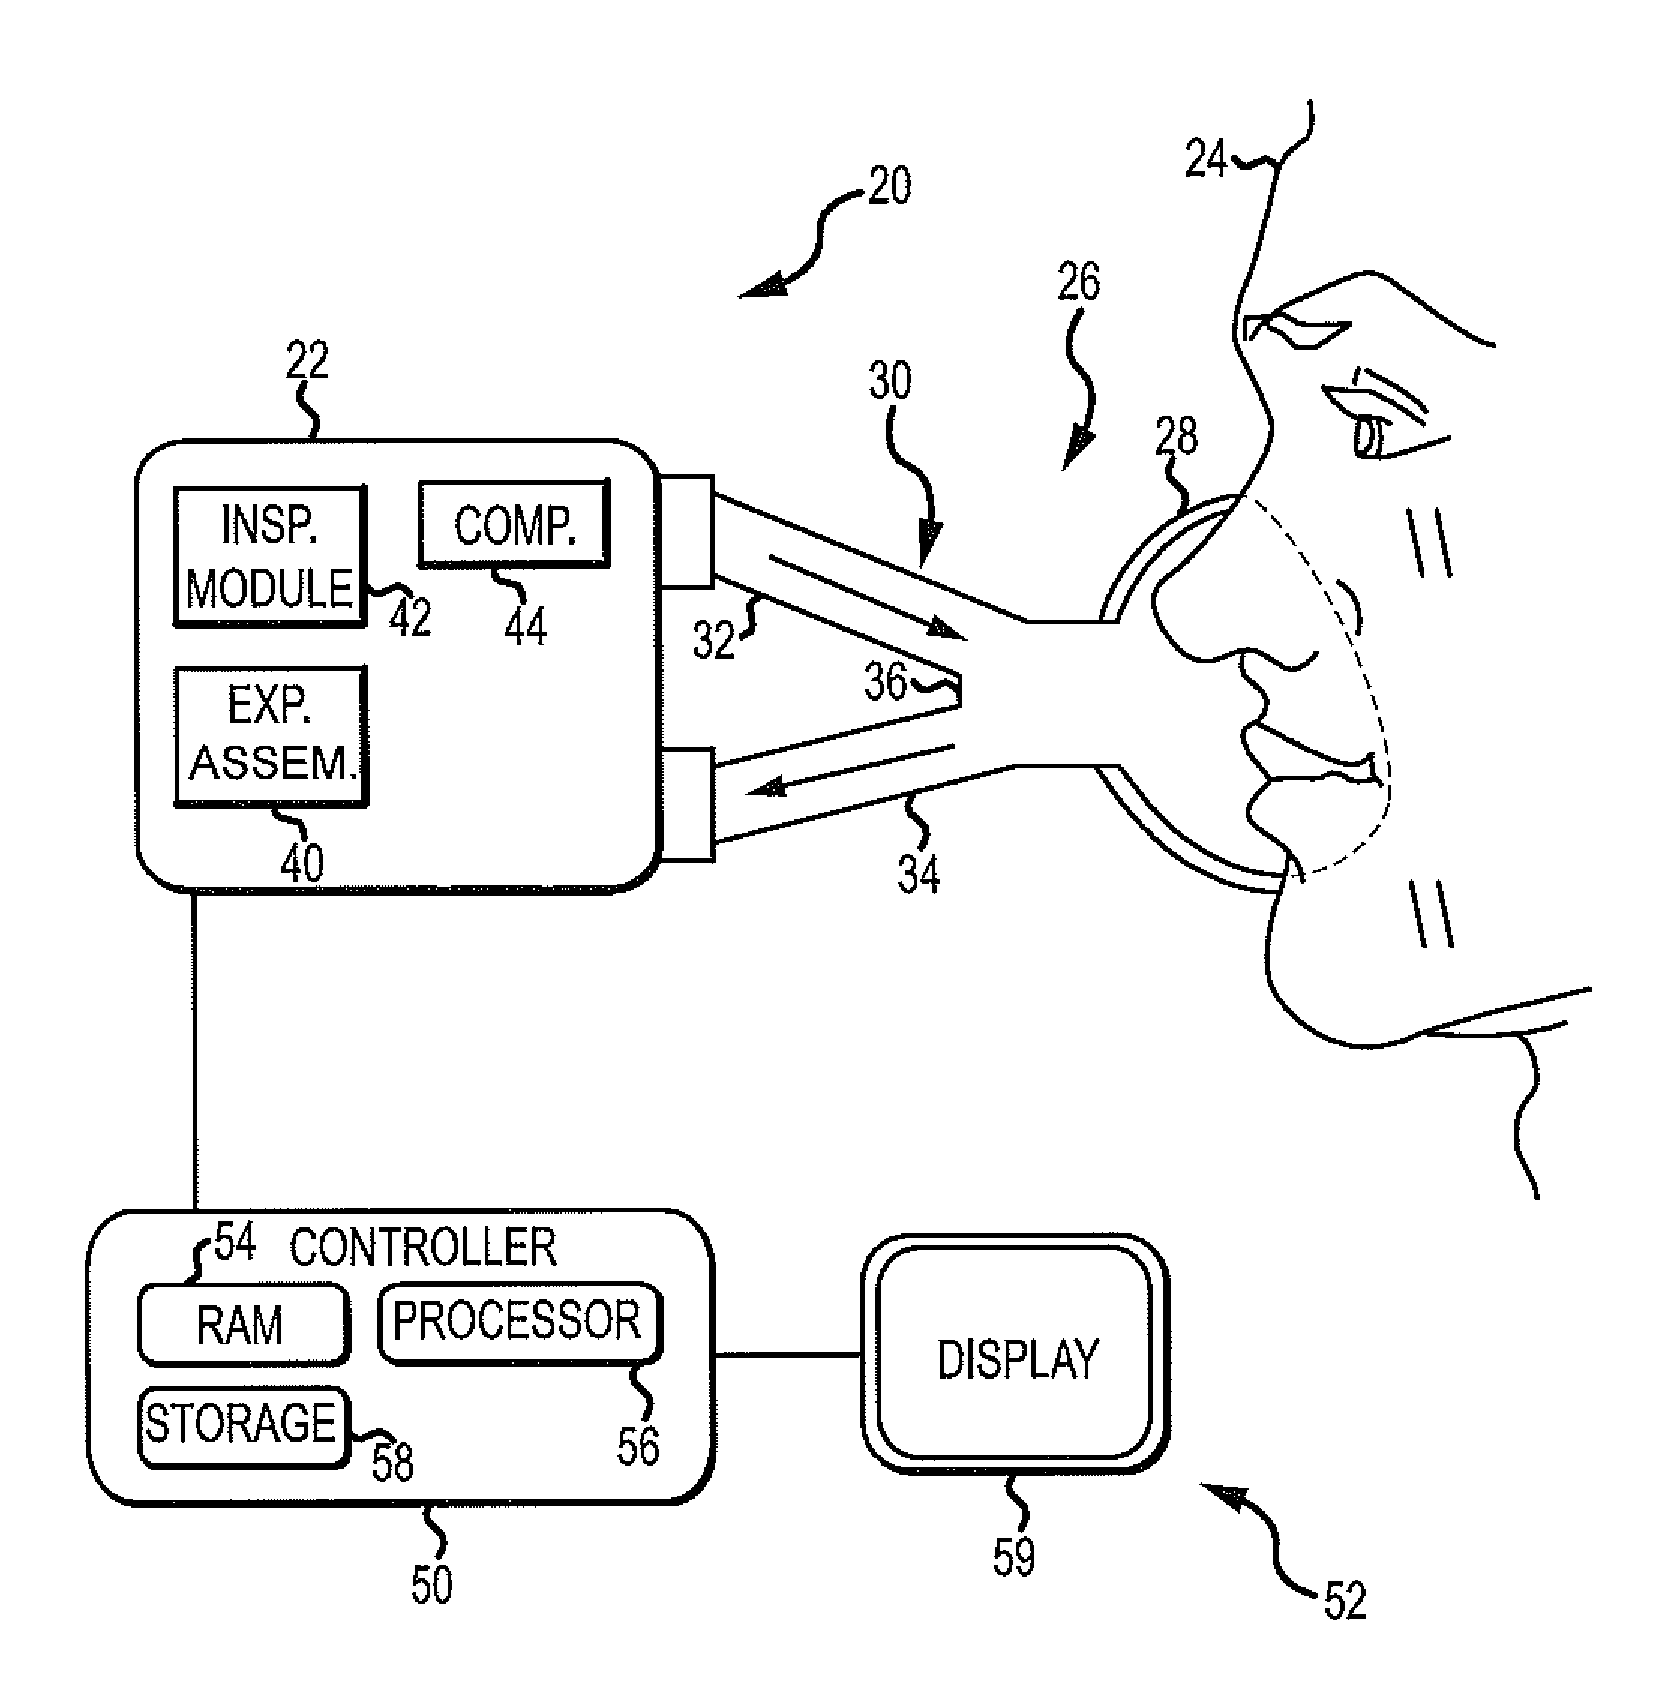 Exhalation Valve Assembly With Integral Flow Sensor